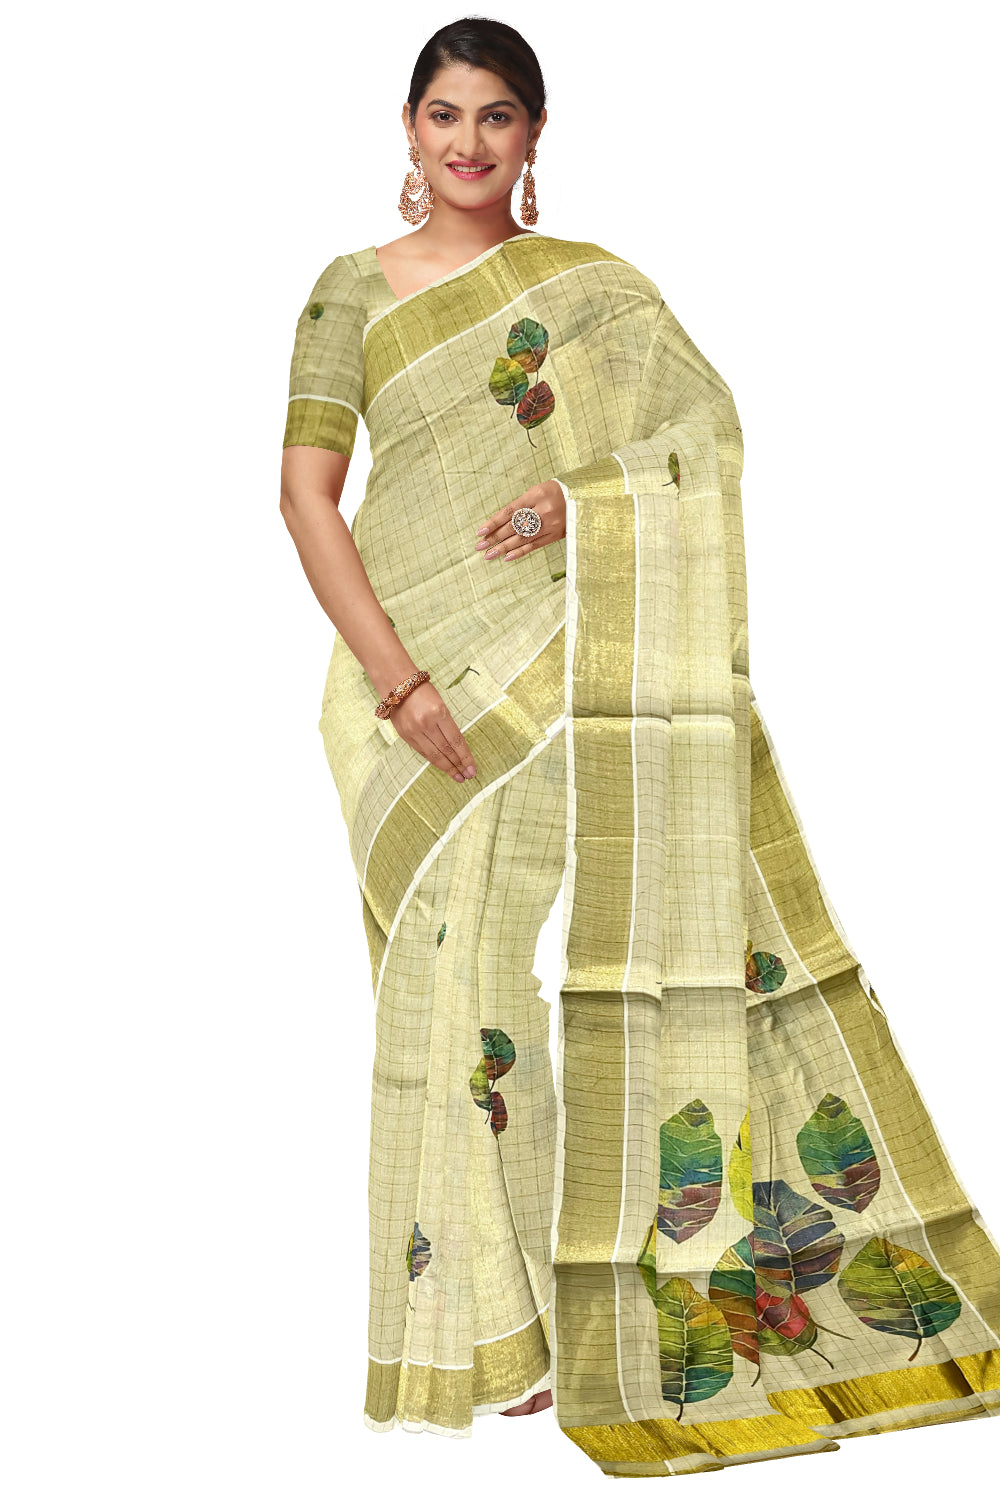 Kerala Tissue Kasavu Check Design Saree with Leaf Mural Prints on Body